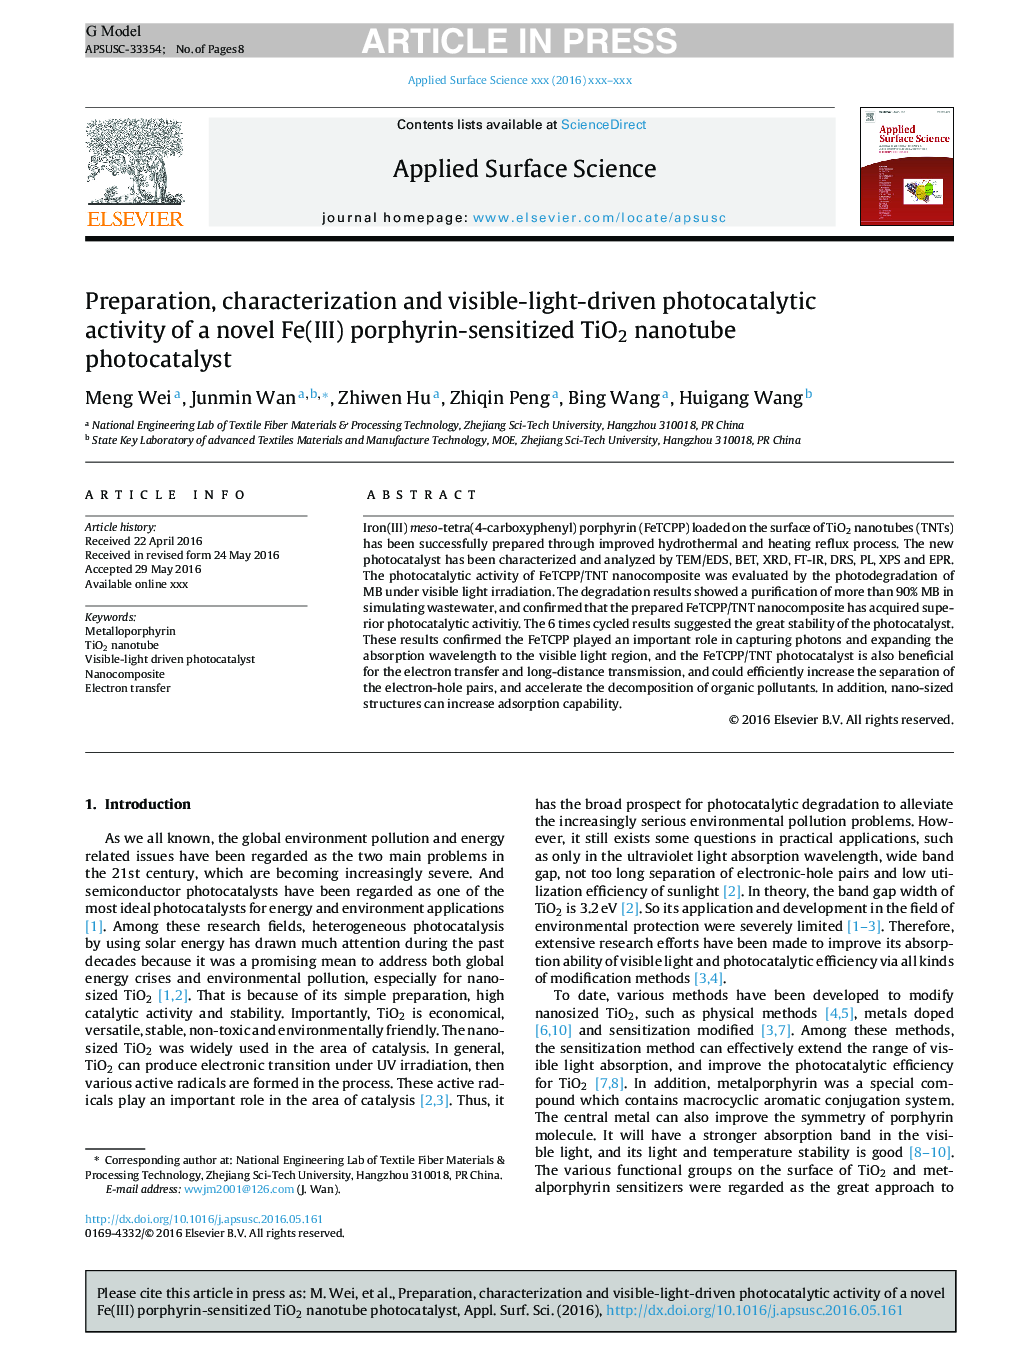 Preparation, characterization and visible-light-driven photocatalytic activity of a novel Fe(III) porphyrin-sensitized TiO2 nanotube photocatalyst